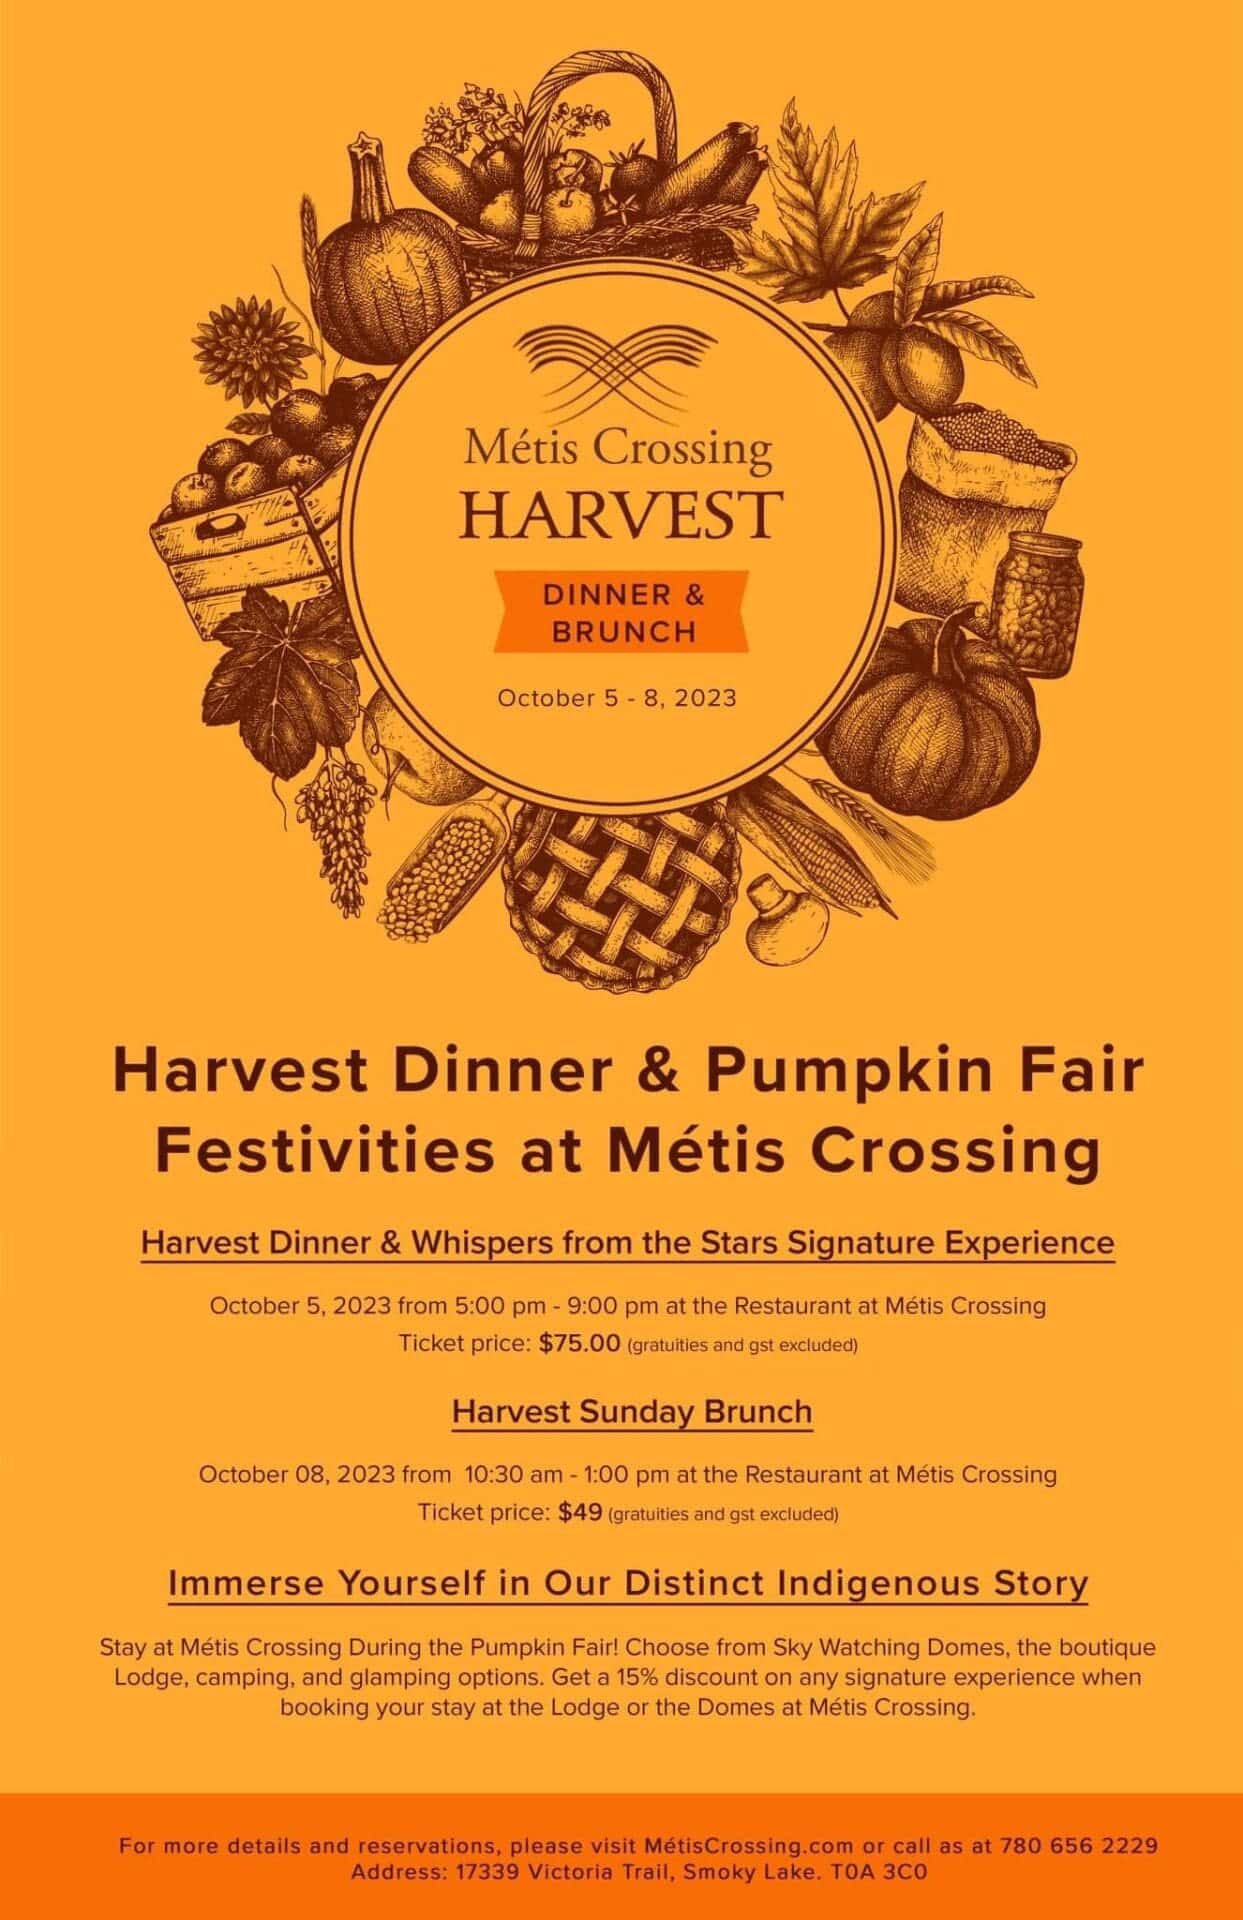 https://goeastofedmonton.com/wp-content/uploads/2023/09/Metis-Crossing-Harvest-Dinner-Brunch-1-scaled.jpg